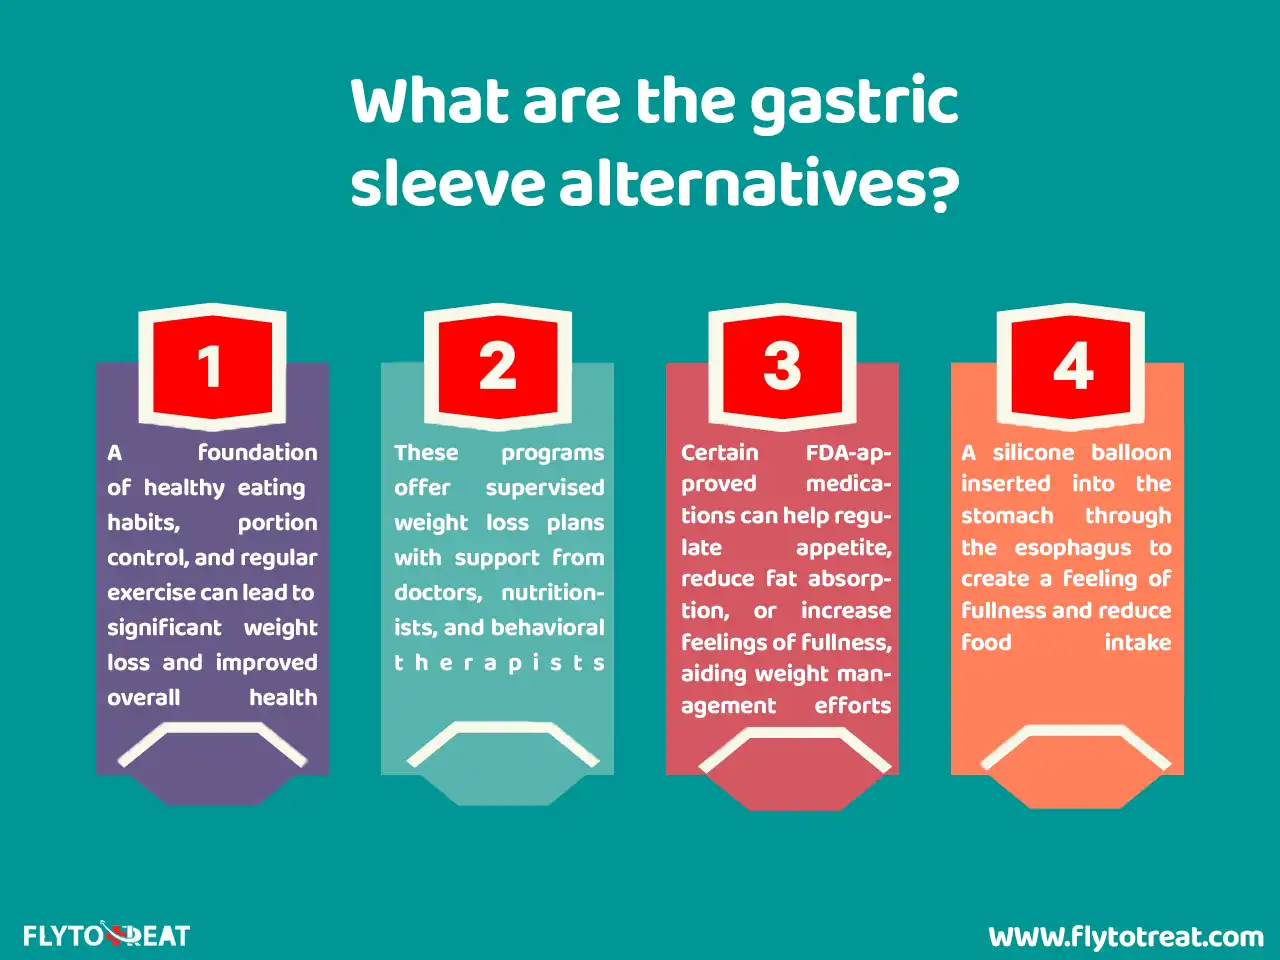 Gastric sleeve alternatives